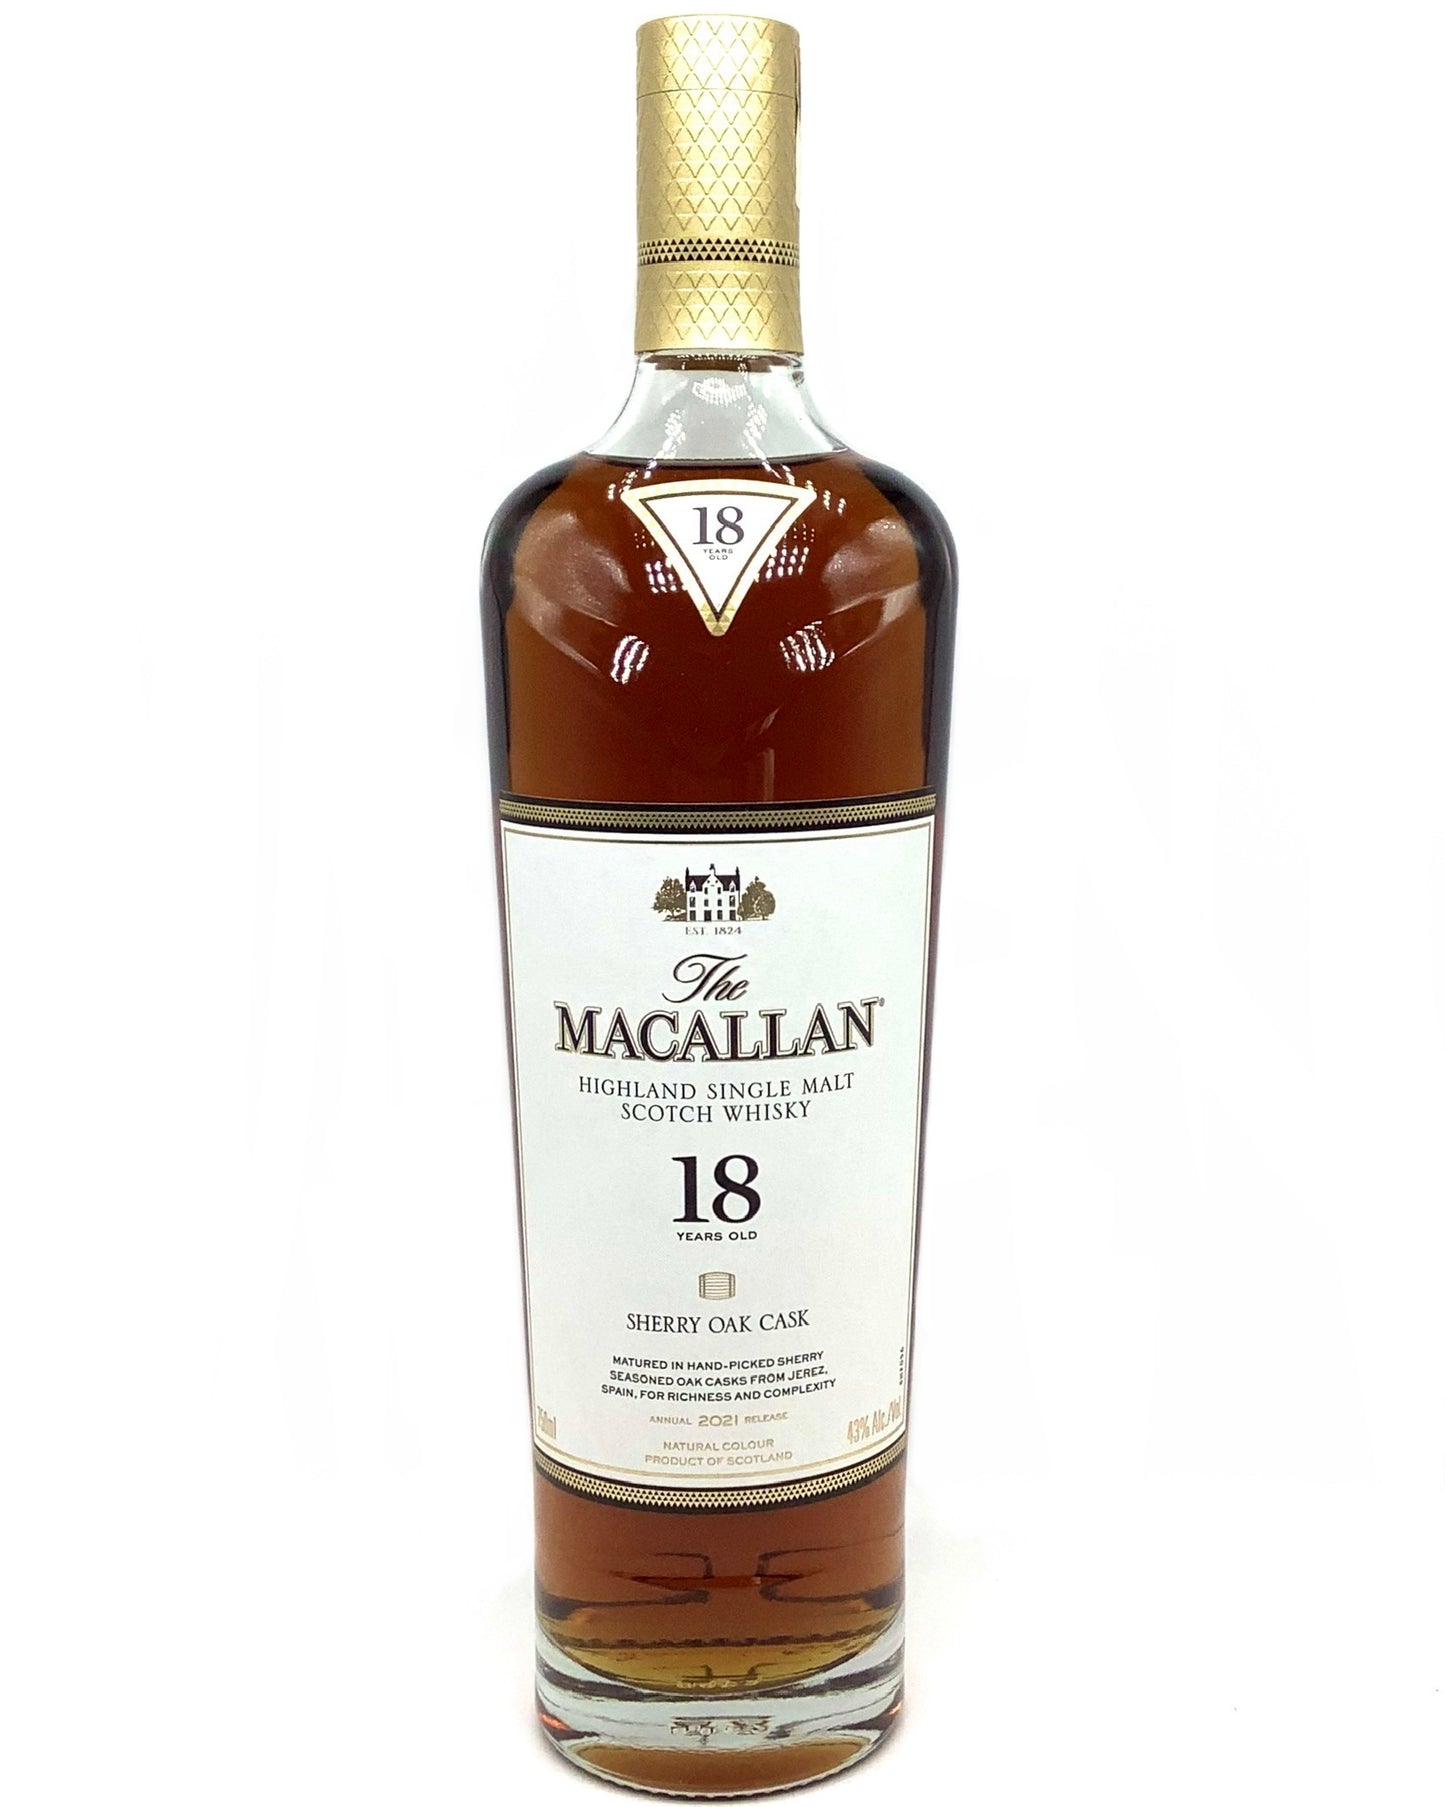 The Macallan 18 Year Sherry Oak Cask Highland Single Malt Scotch